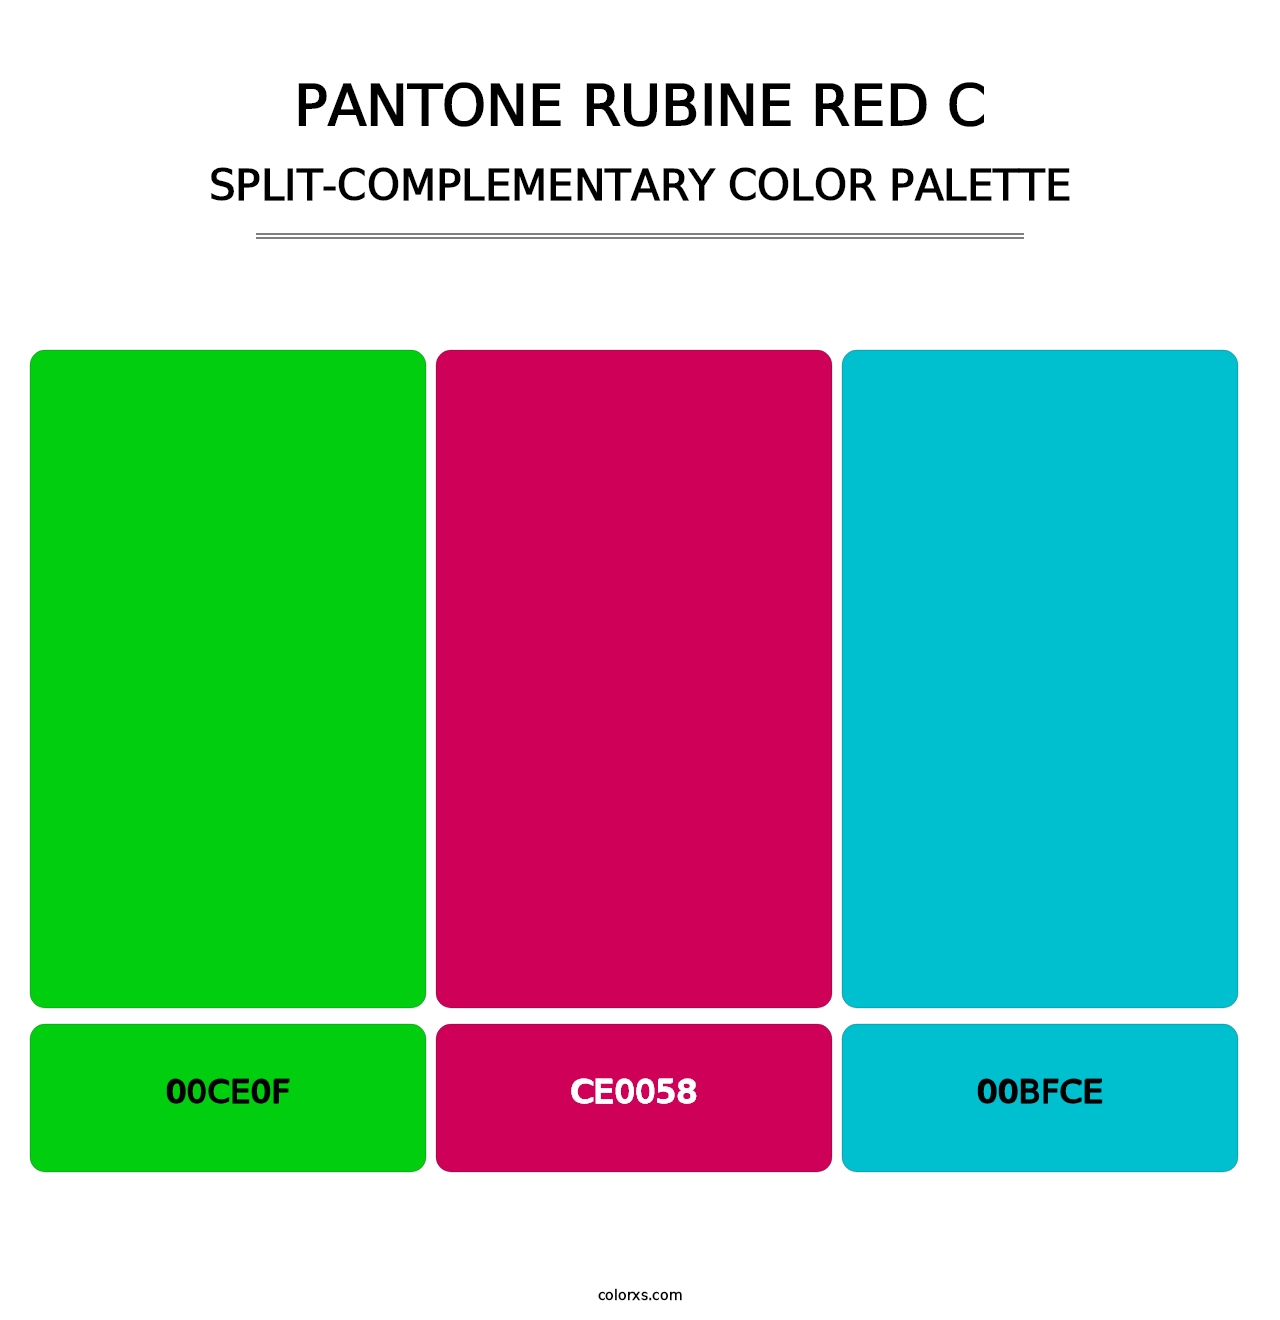 PANTONE Rubine Red C - Split-Complementary Color Palette